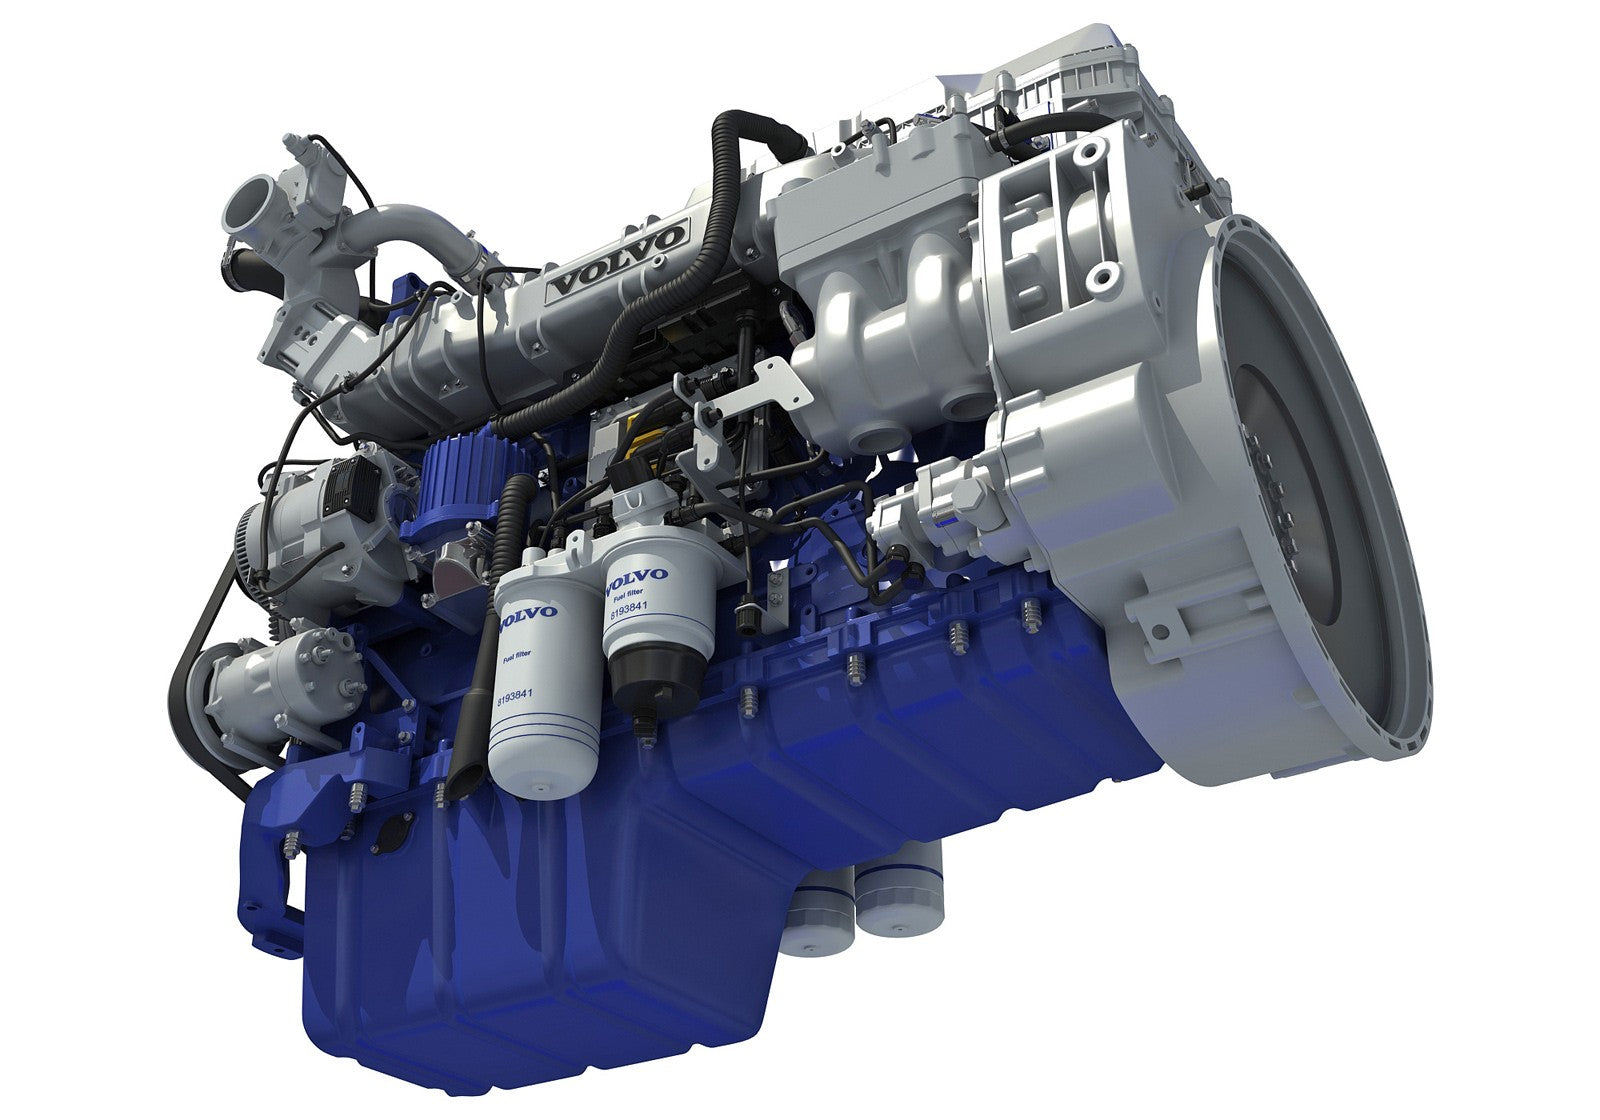 Volvo D13 Engine 3D Model